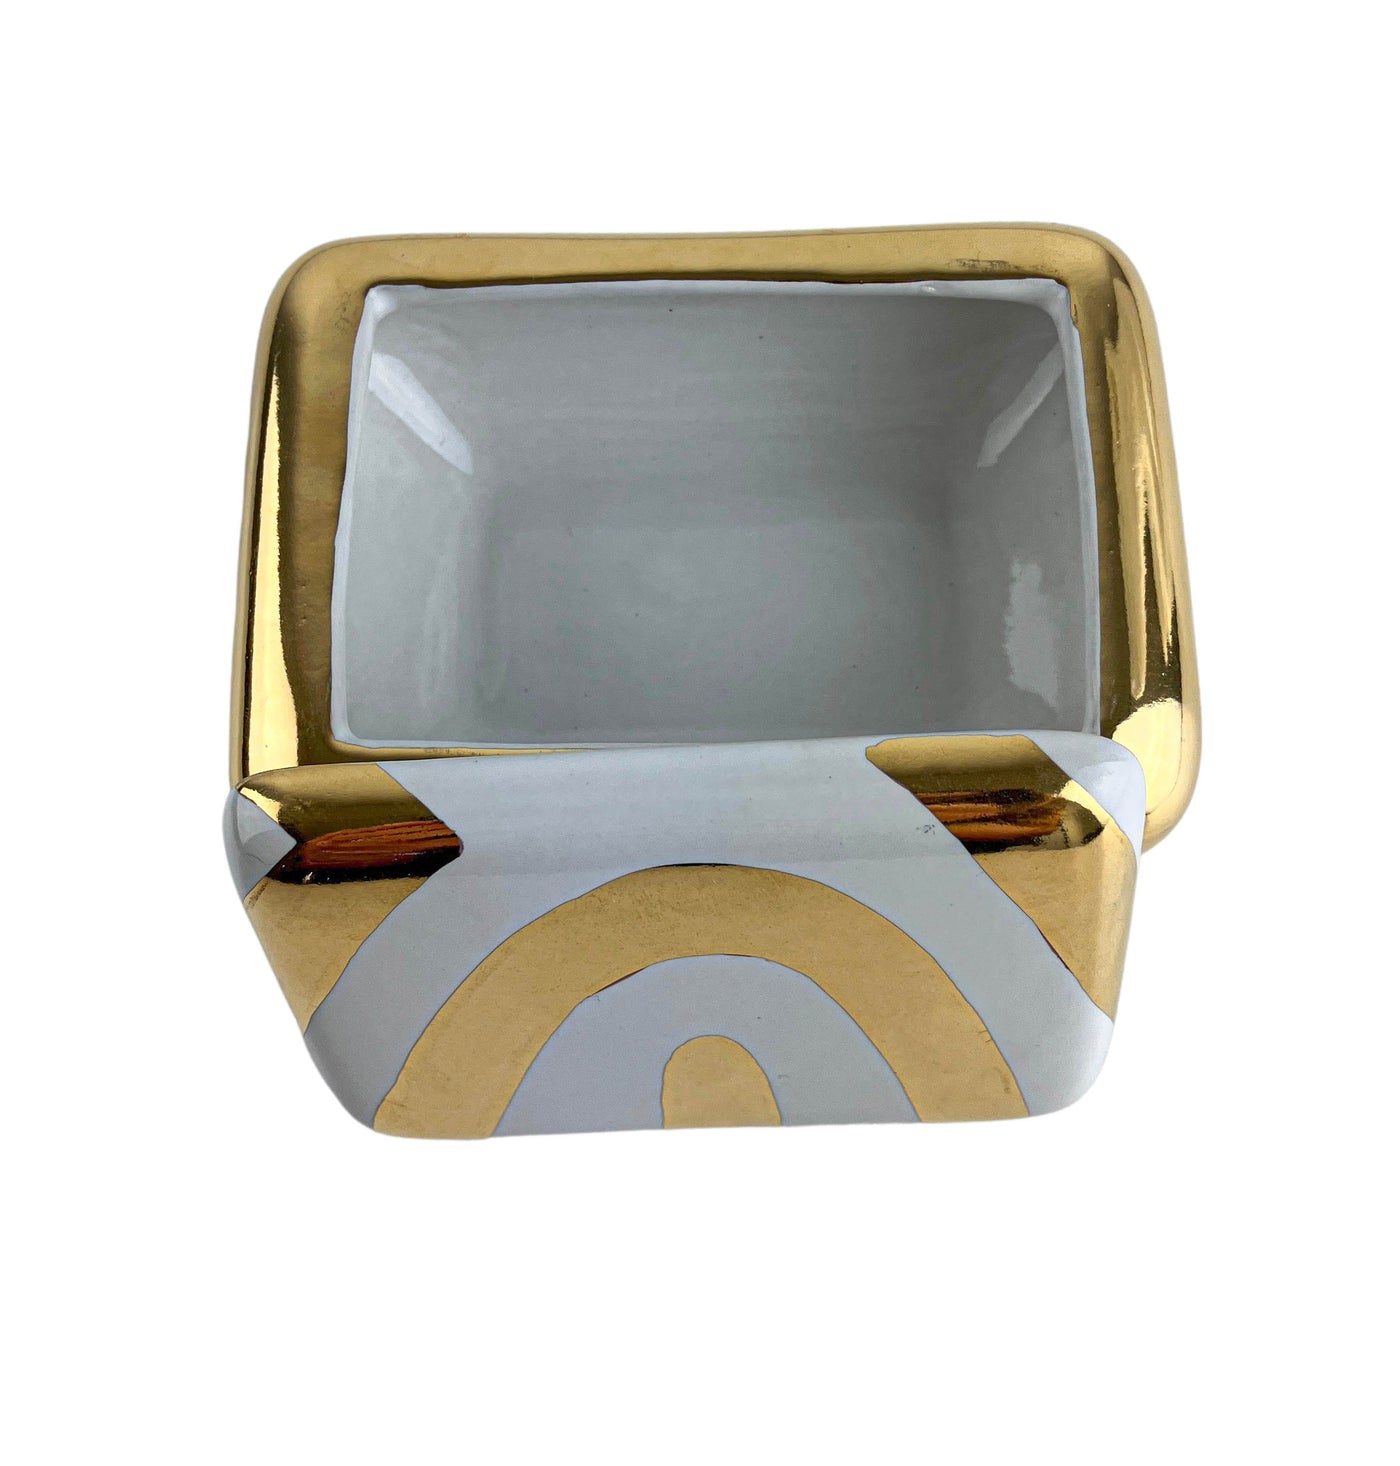 Waylande Gregory Mod Zebra Box in Metallic Gold - Discounts on Waylande Gregory at UAL